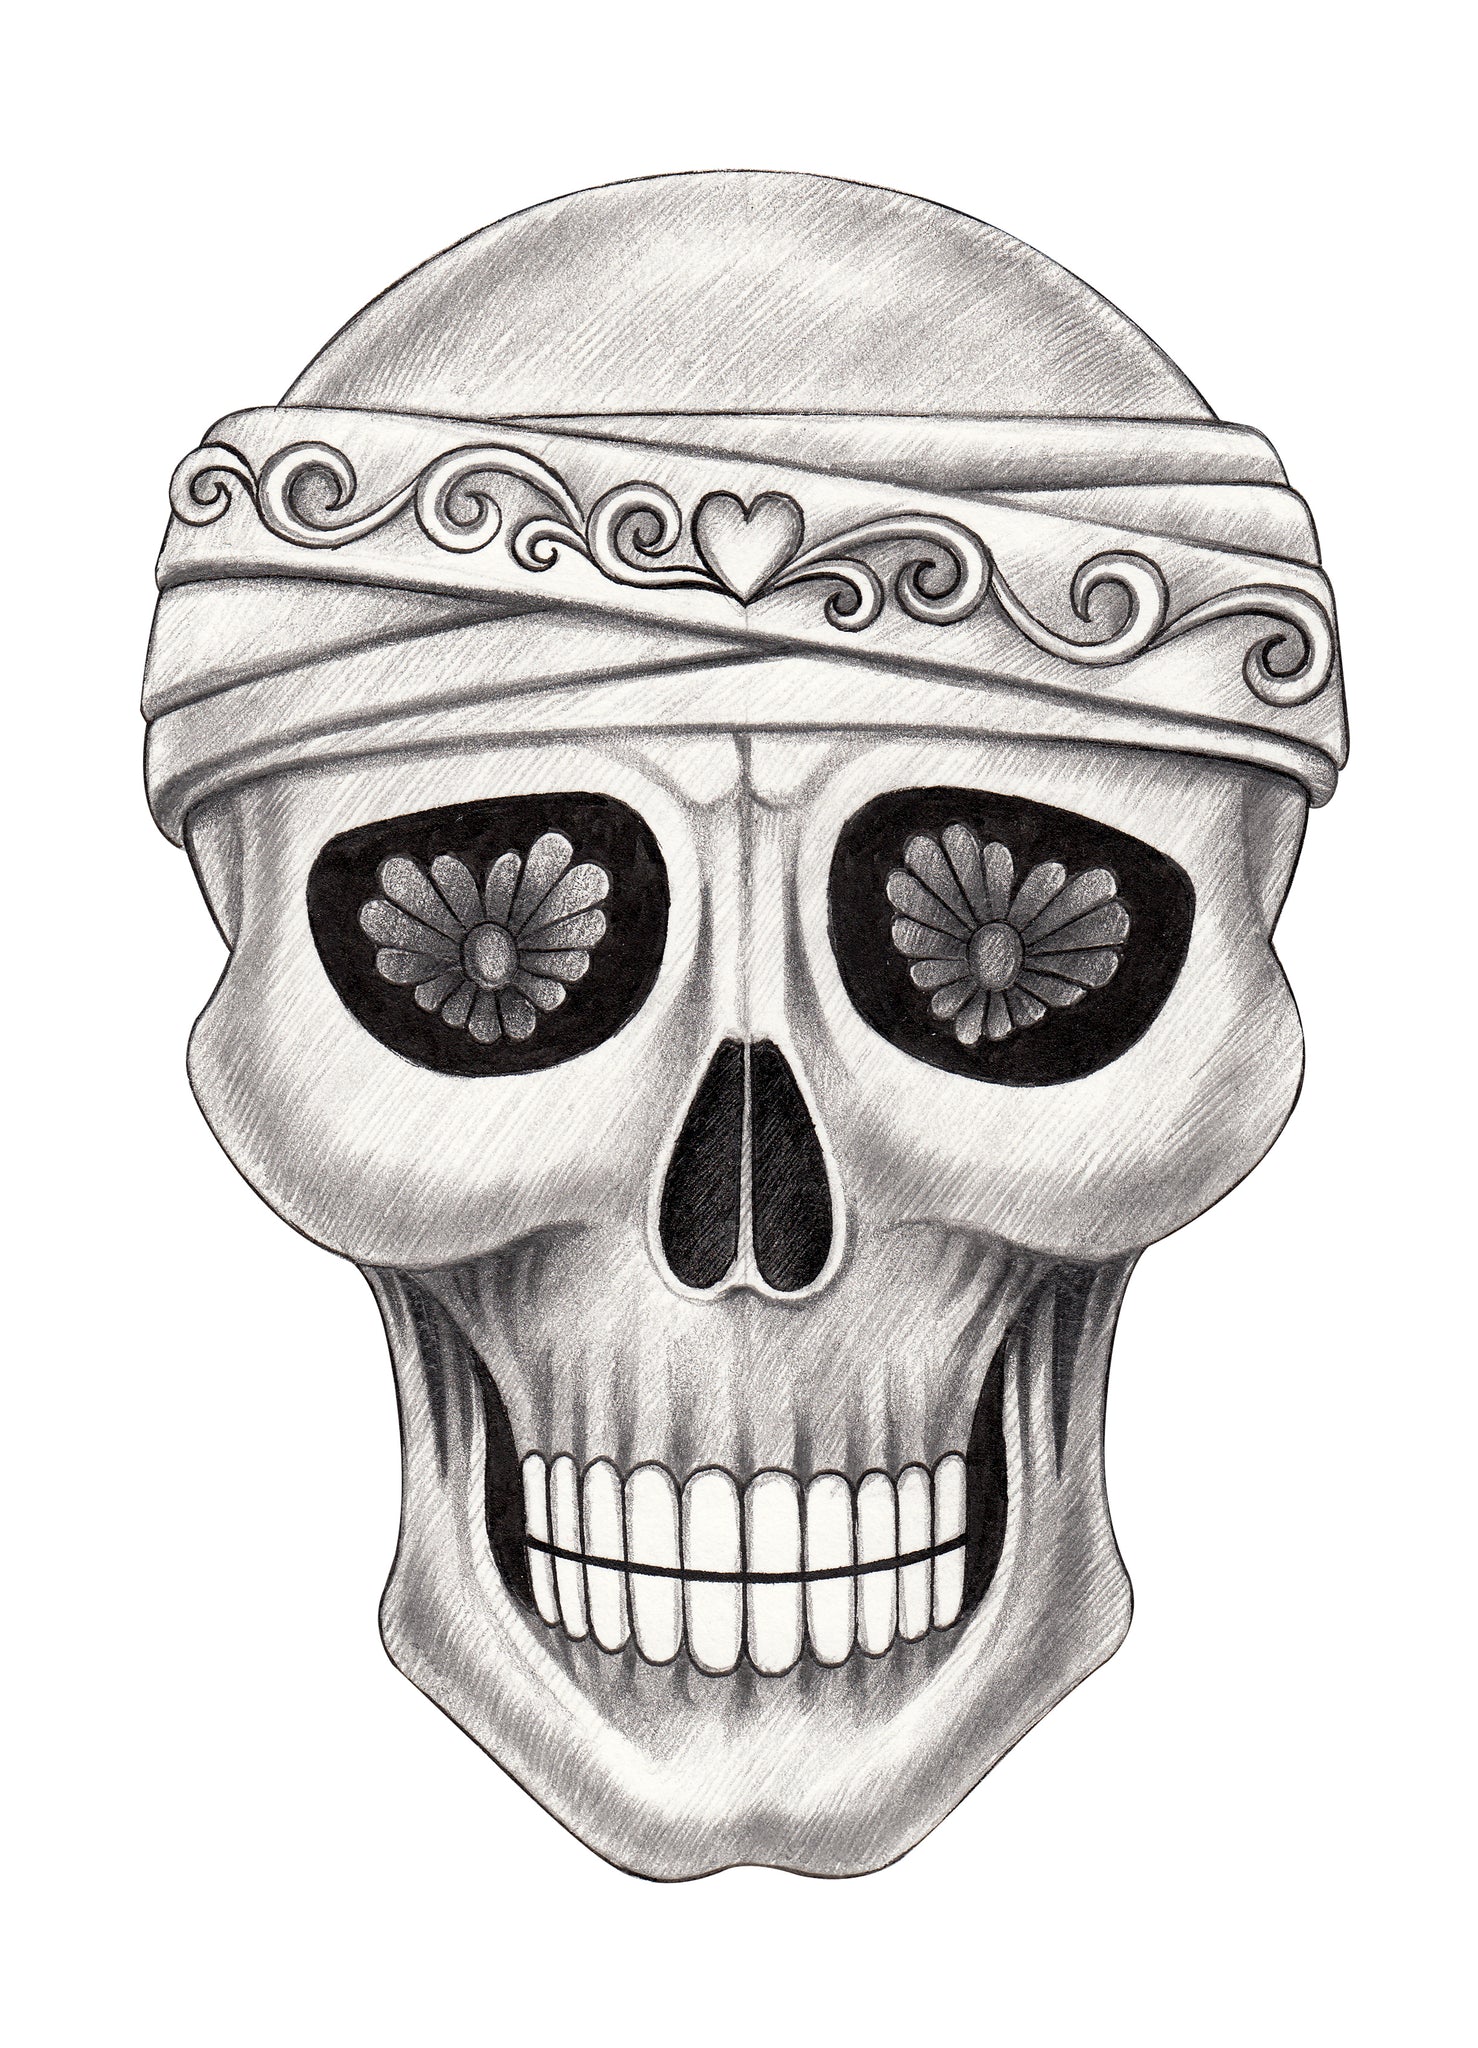 Pencil Sketch Feminine Skull with Flower Heart Eyes Vinyl Decal Sticker